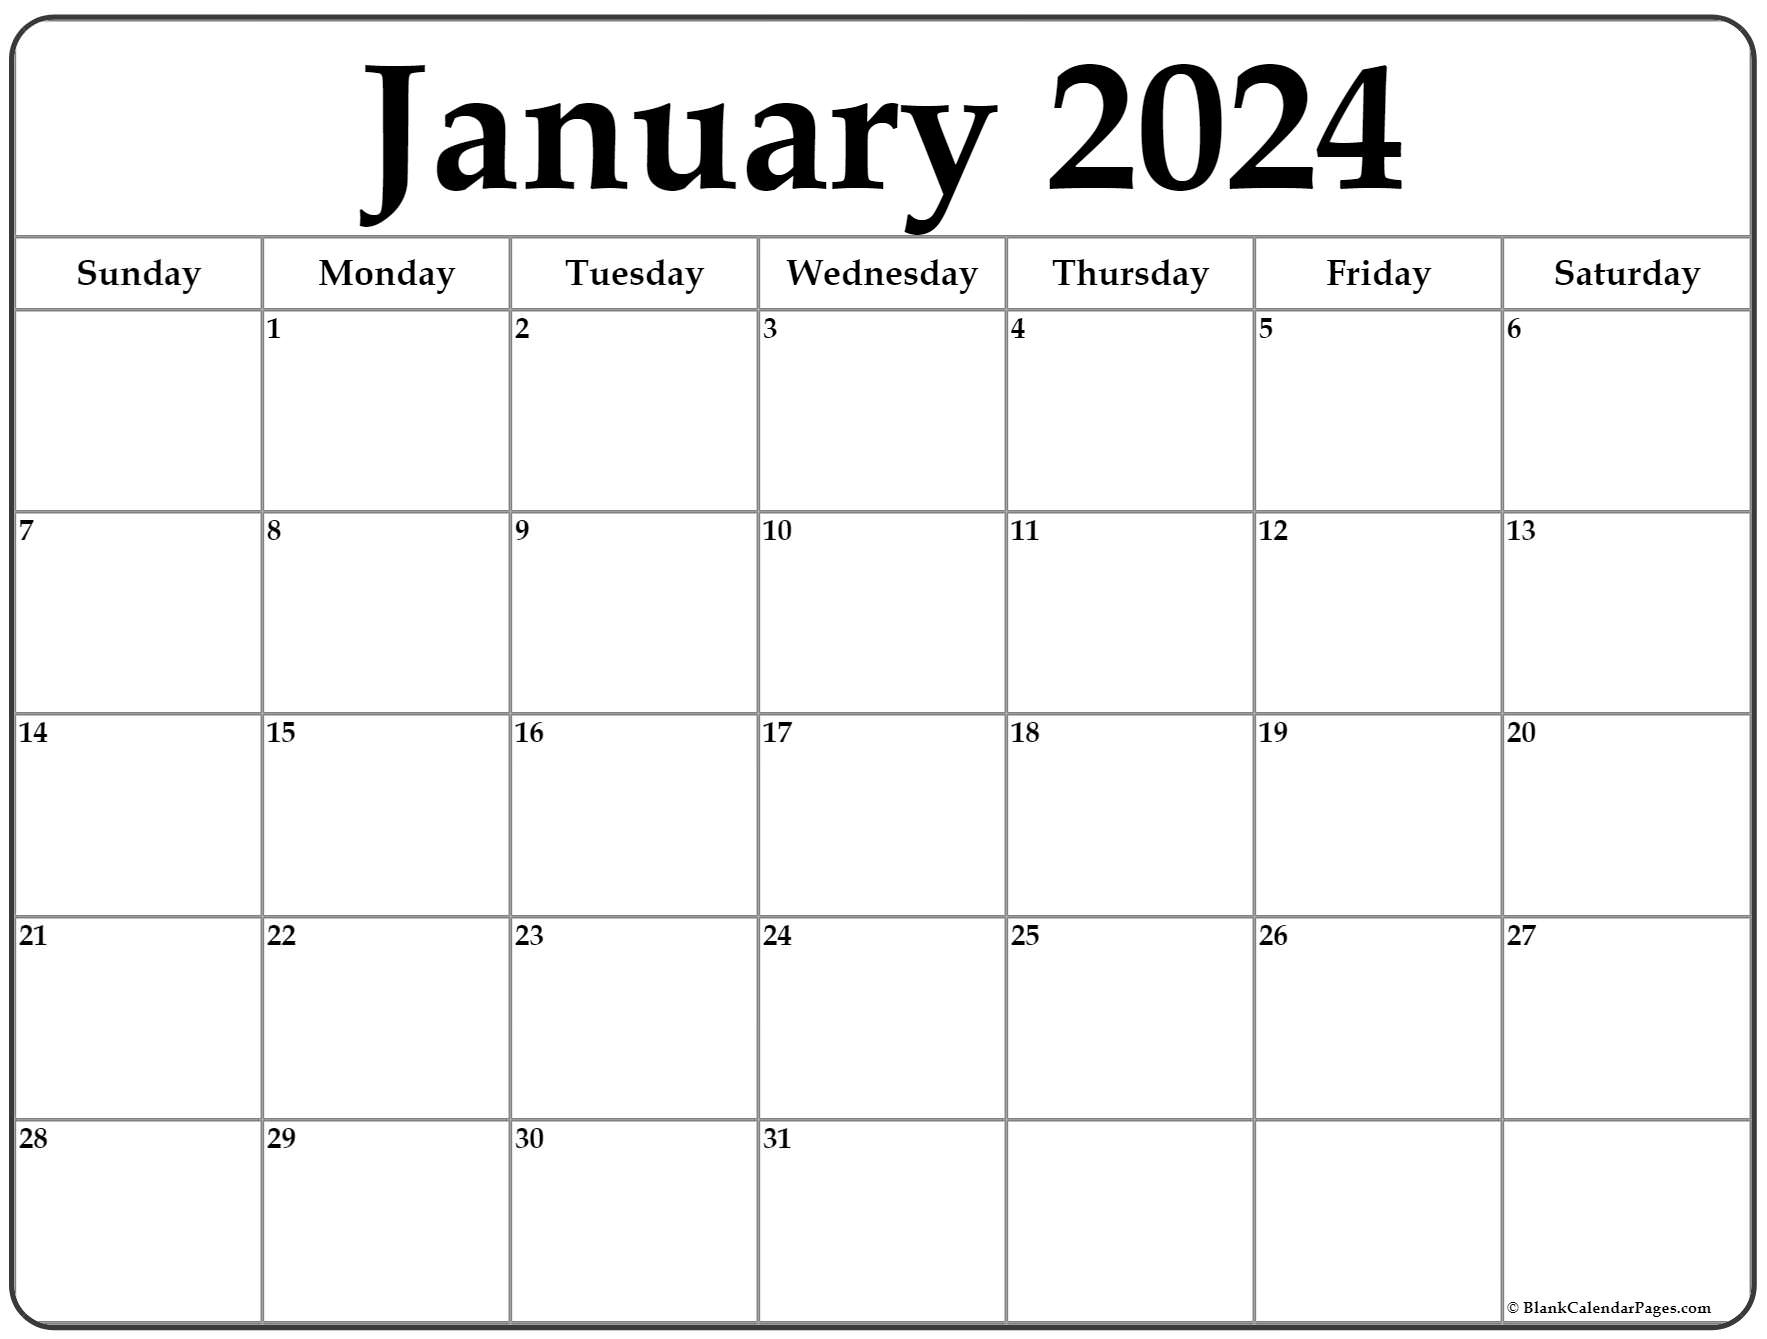 January 2024 Calendar | Free Printable Calendar | Printable Calendar 2024 By Month